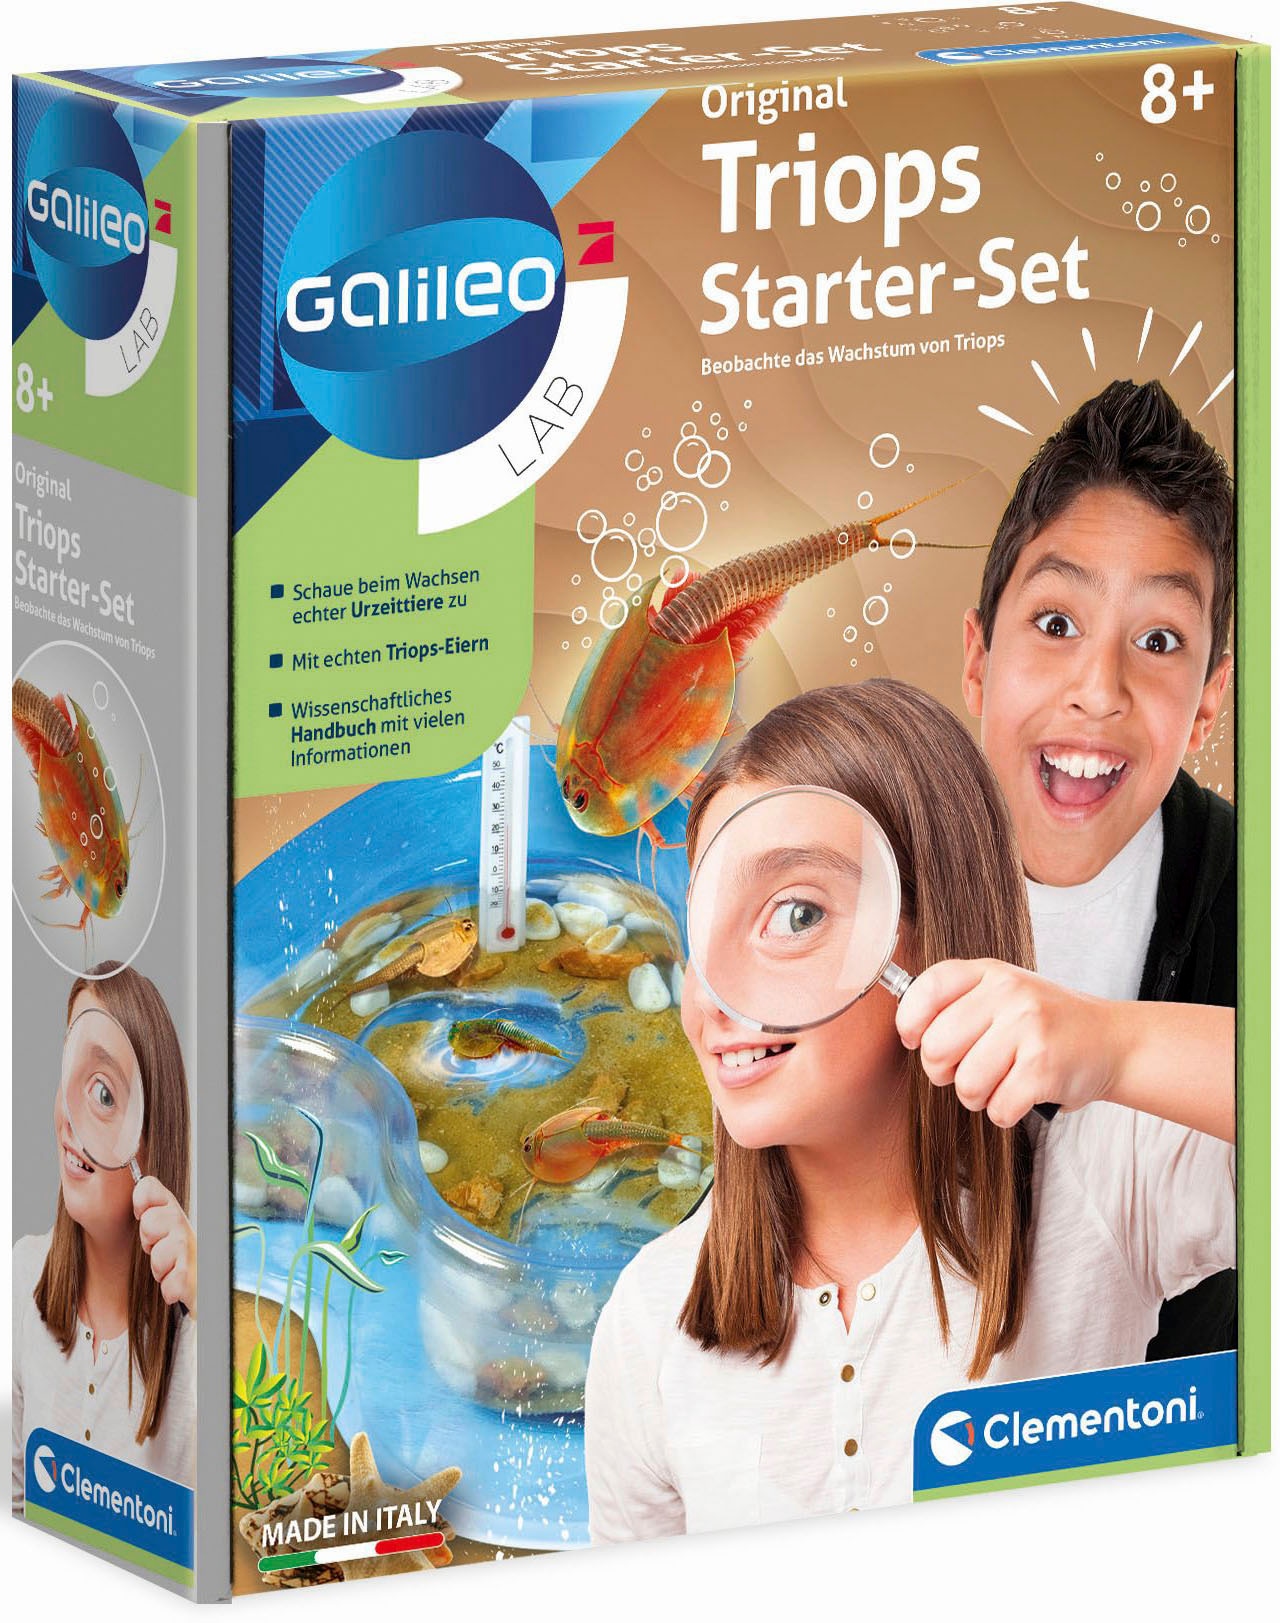 Clementoni® Experimentierkasten »Galileo, Original Triops Starter-Set«, Made in Europe